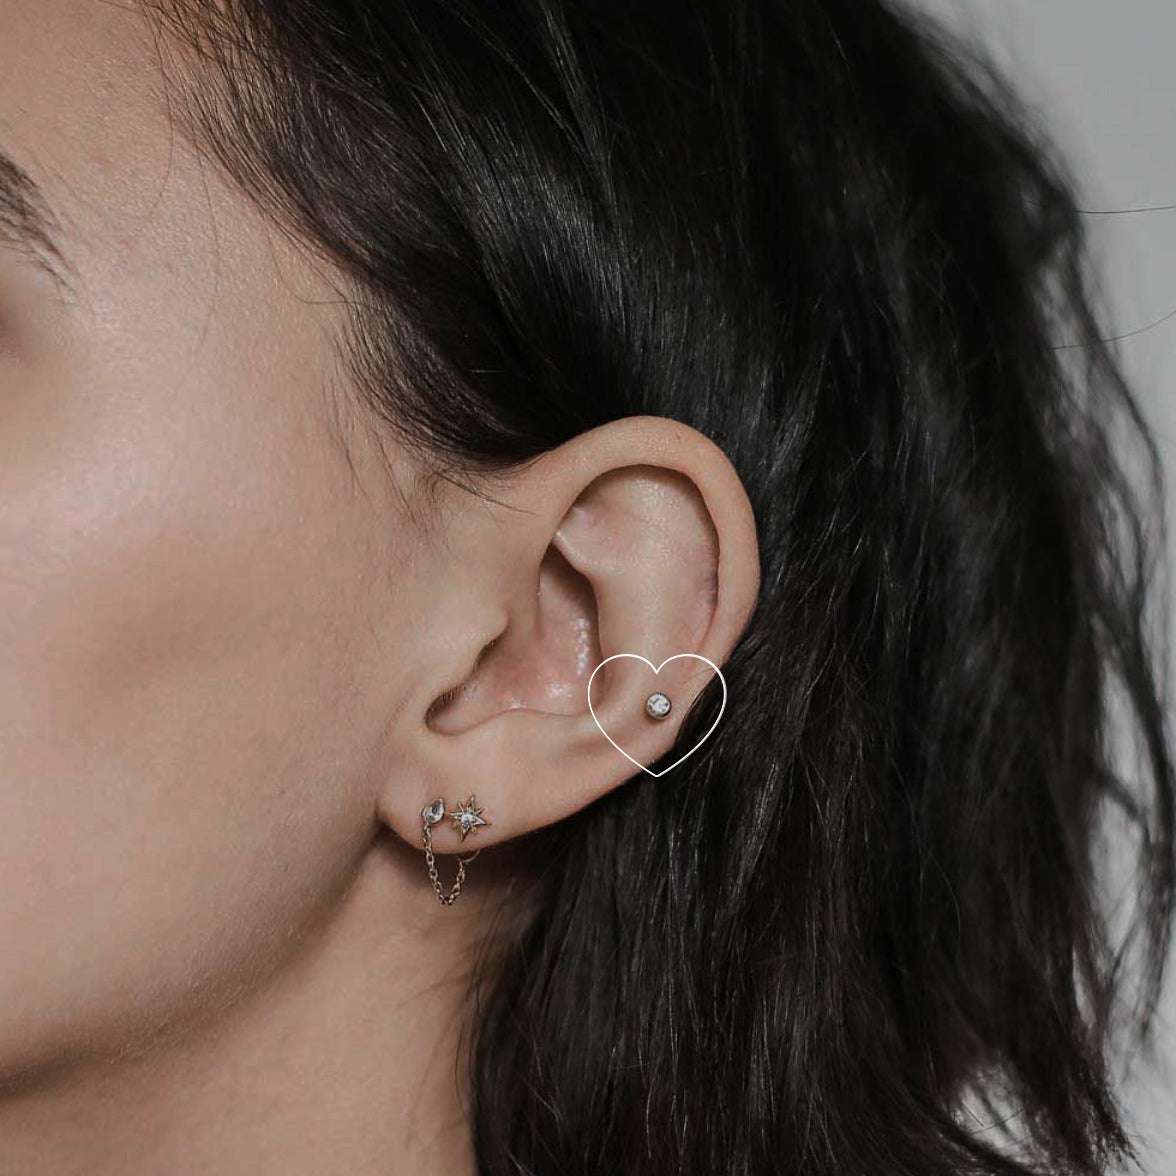 Top 10 Cutest Ear Piercings to Get ASAP for Girls Looking to Update Their  Look